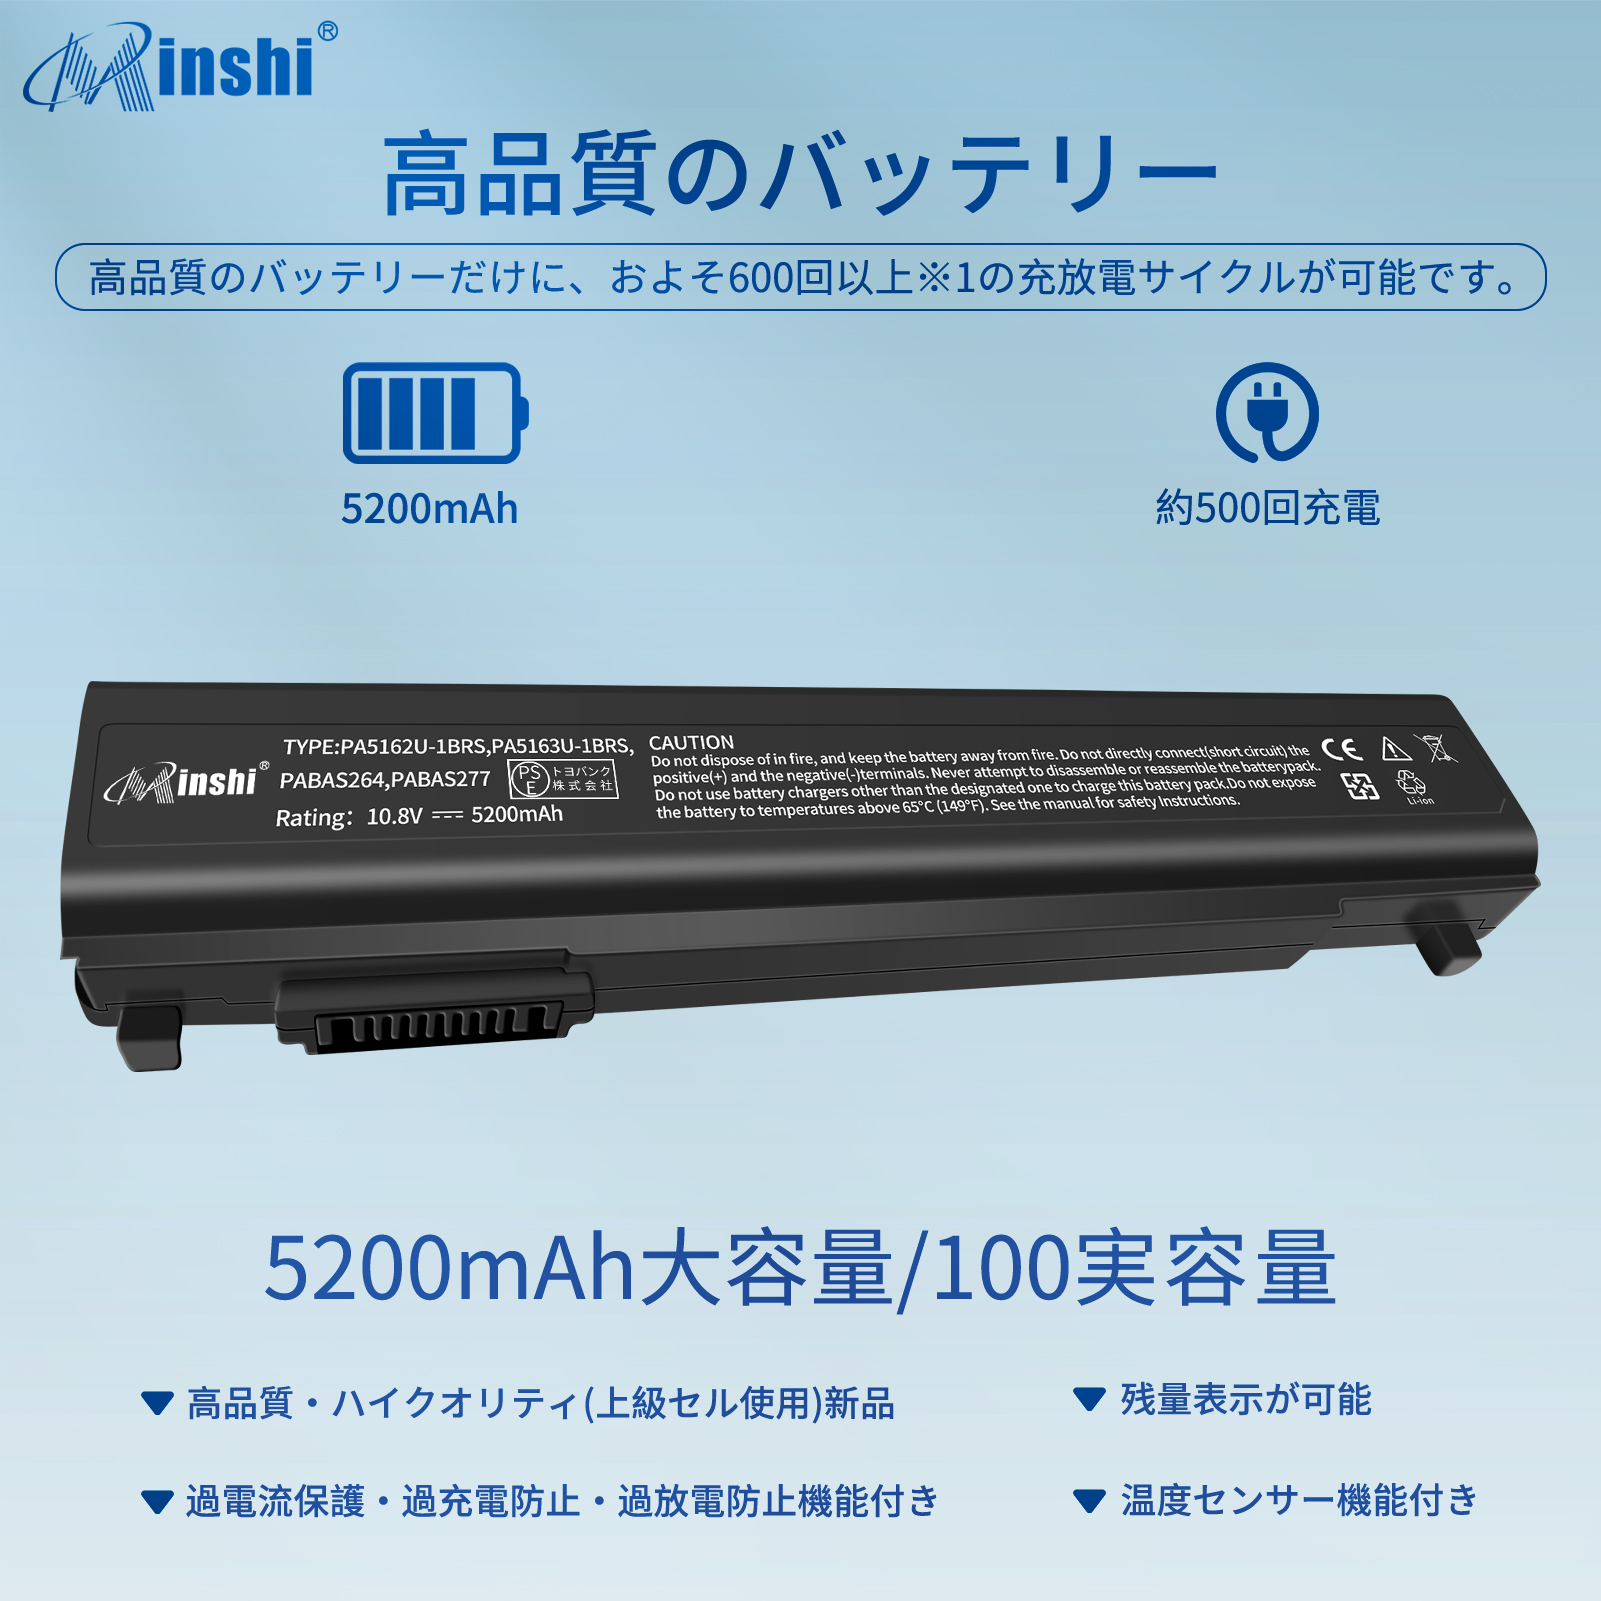  minshi 東芝 PABAS277 dynabook R734 対応 DYNABOOK R73  PABAS277 PA5162U-1BRS  5200mAh 高品質交換用バッテリー